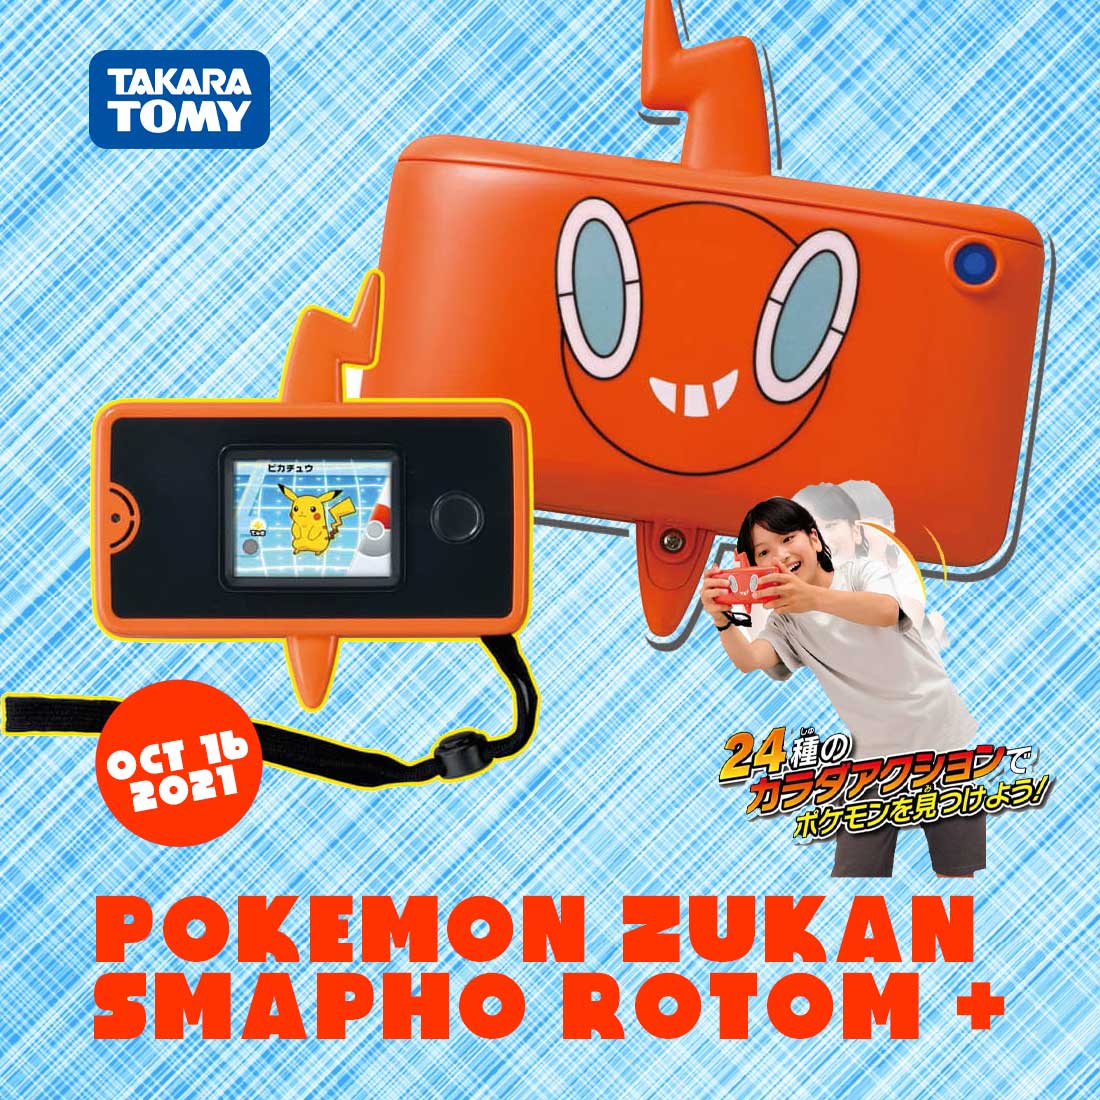 [NEW] Pocket Monster Pokemon Zukan -Smapho Rotom +(Plus) Takara Tomy Japan  [ OCT 16 2021 ]